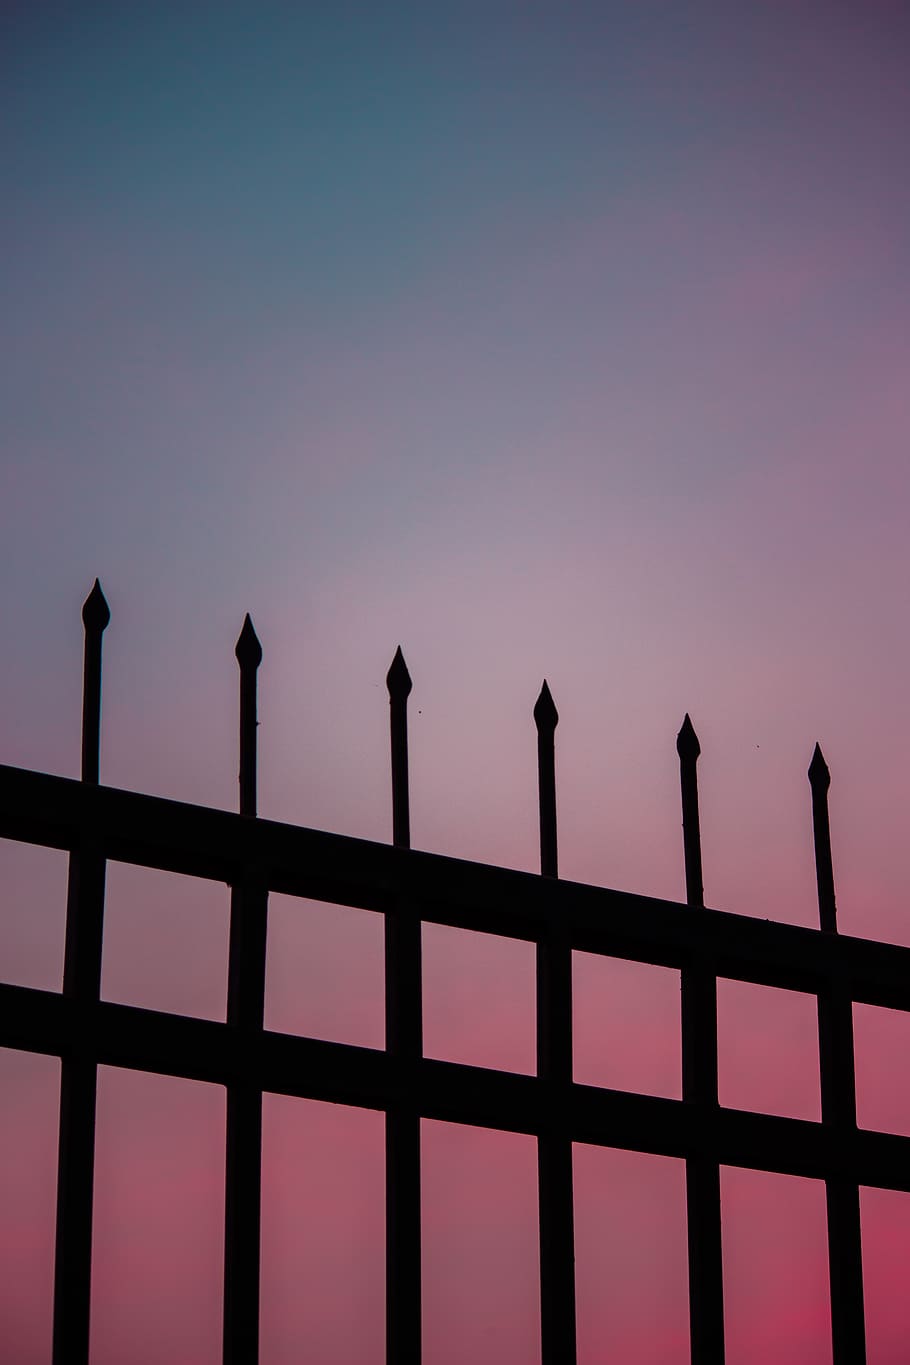 HD wallpaper: minimal, pastel, iphone wallpaper, pink, sky, sunset, fence